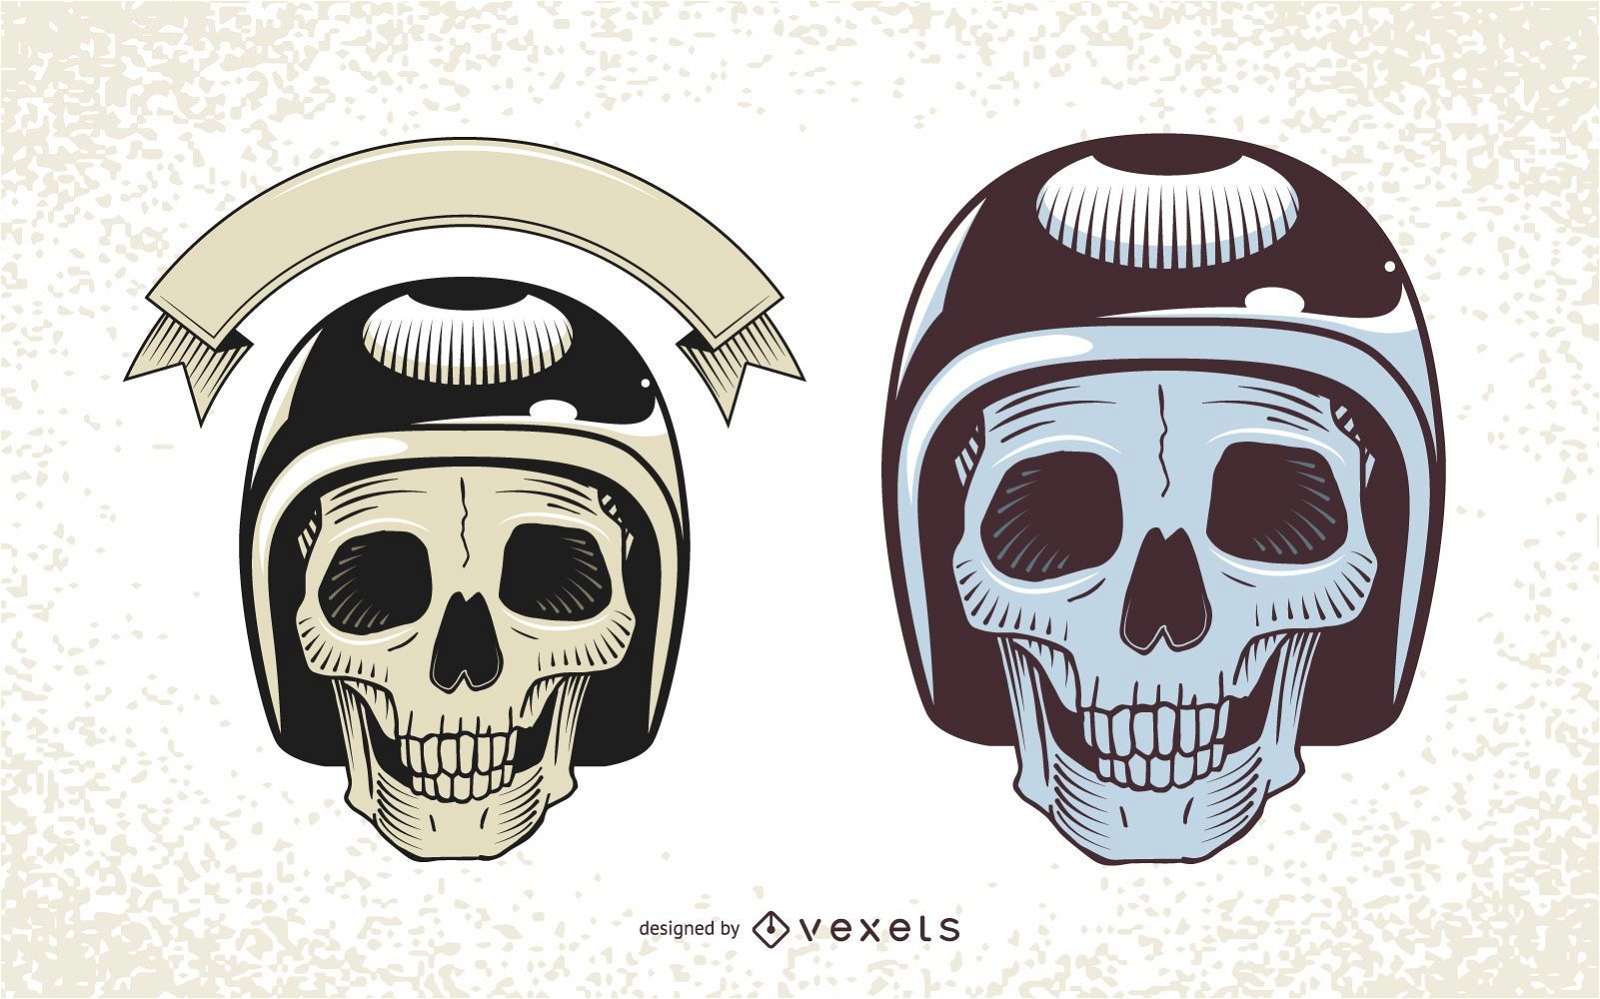 Skull with motorcycle helmet illustrations